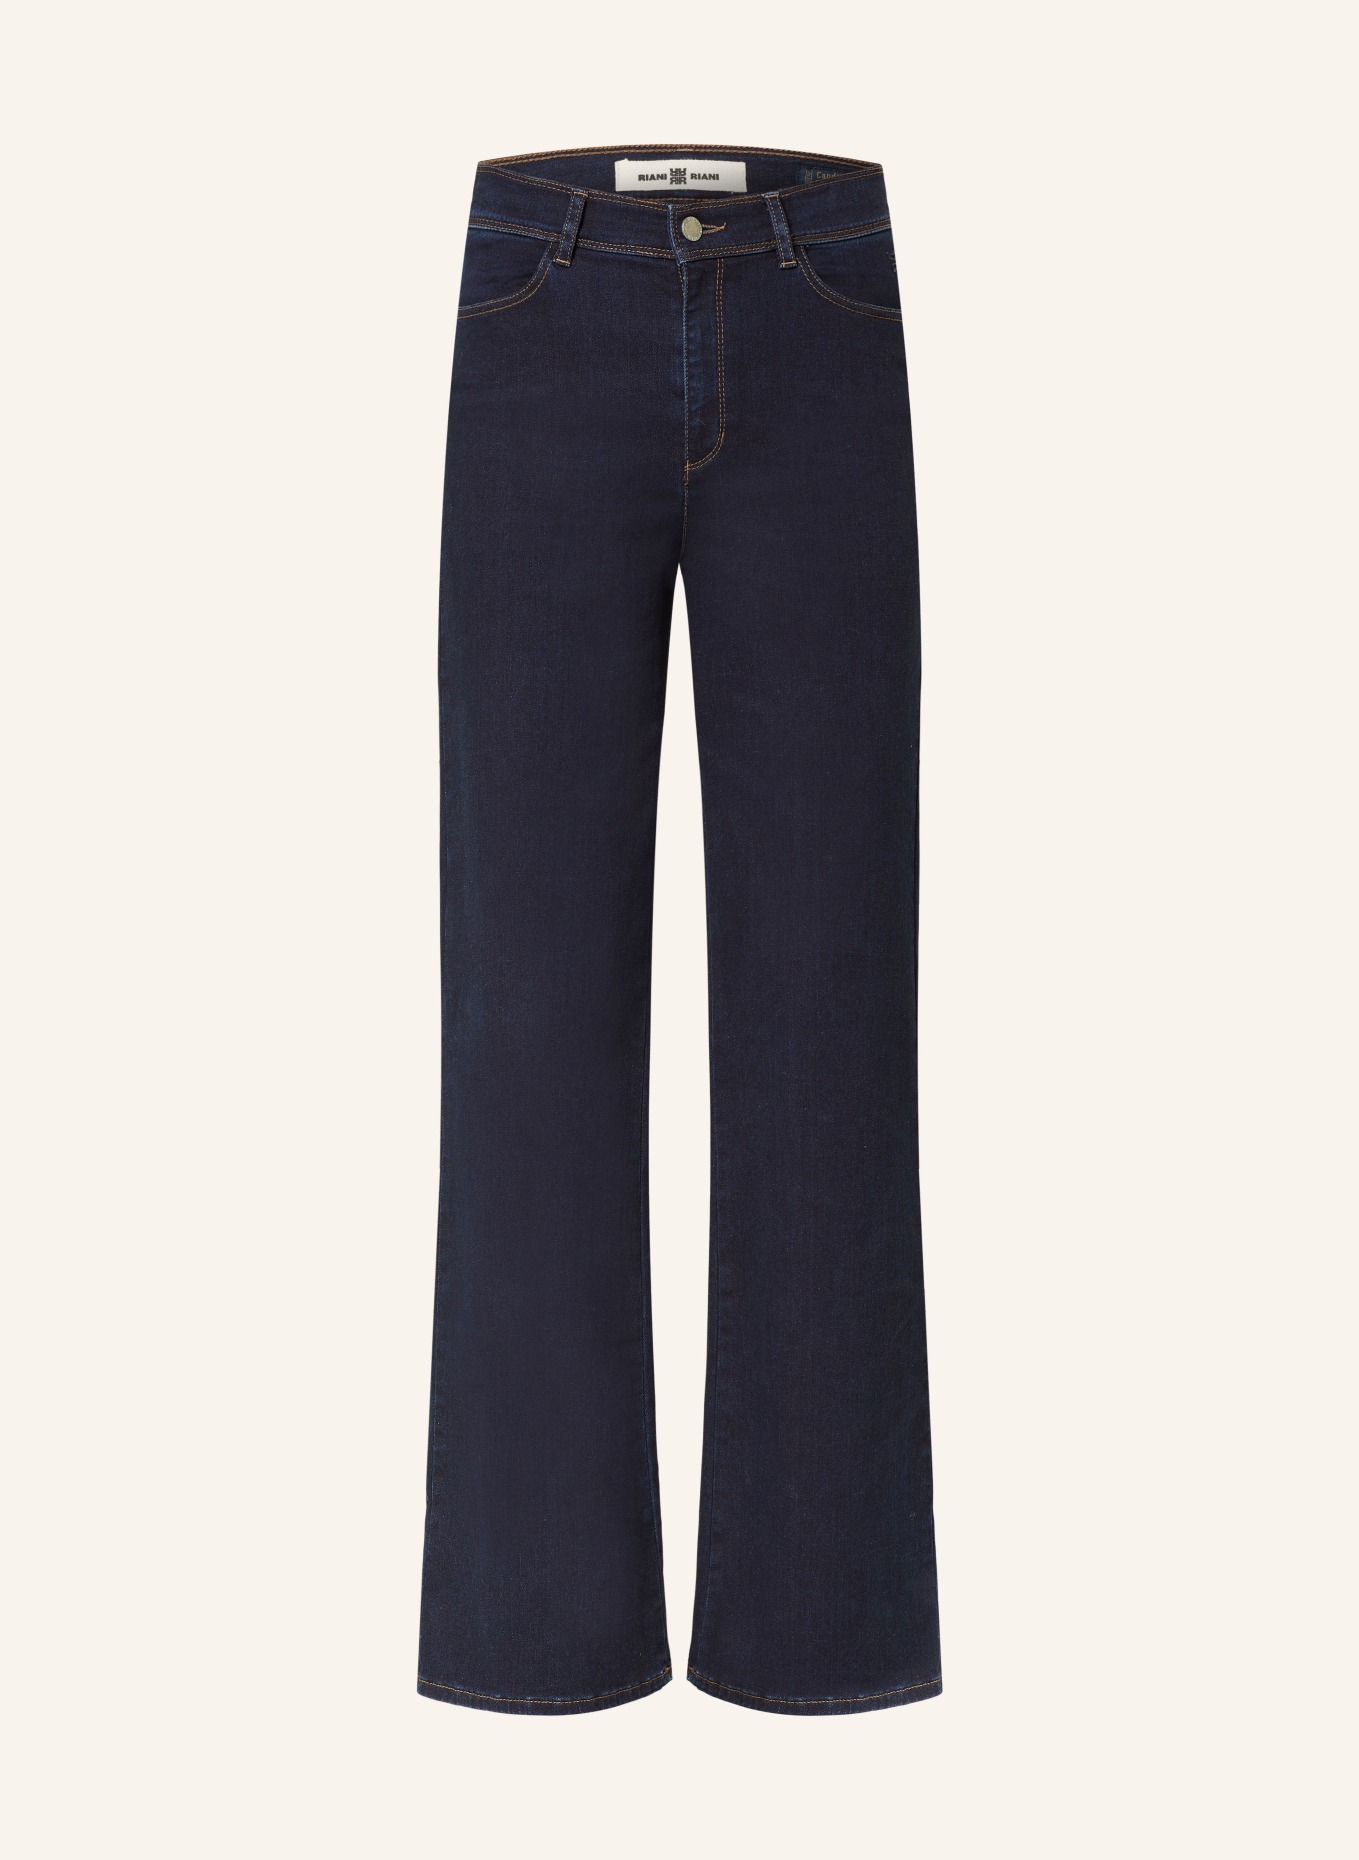 RIANI Flared Jeans, Farbe: 449 dark blue denim (Bild 1)